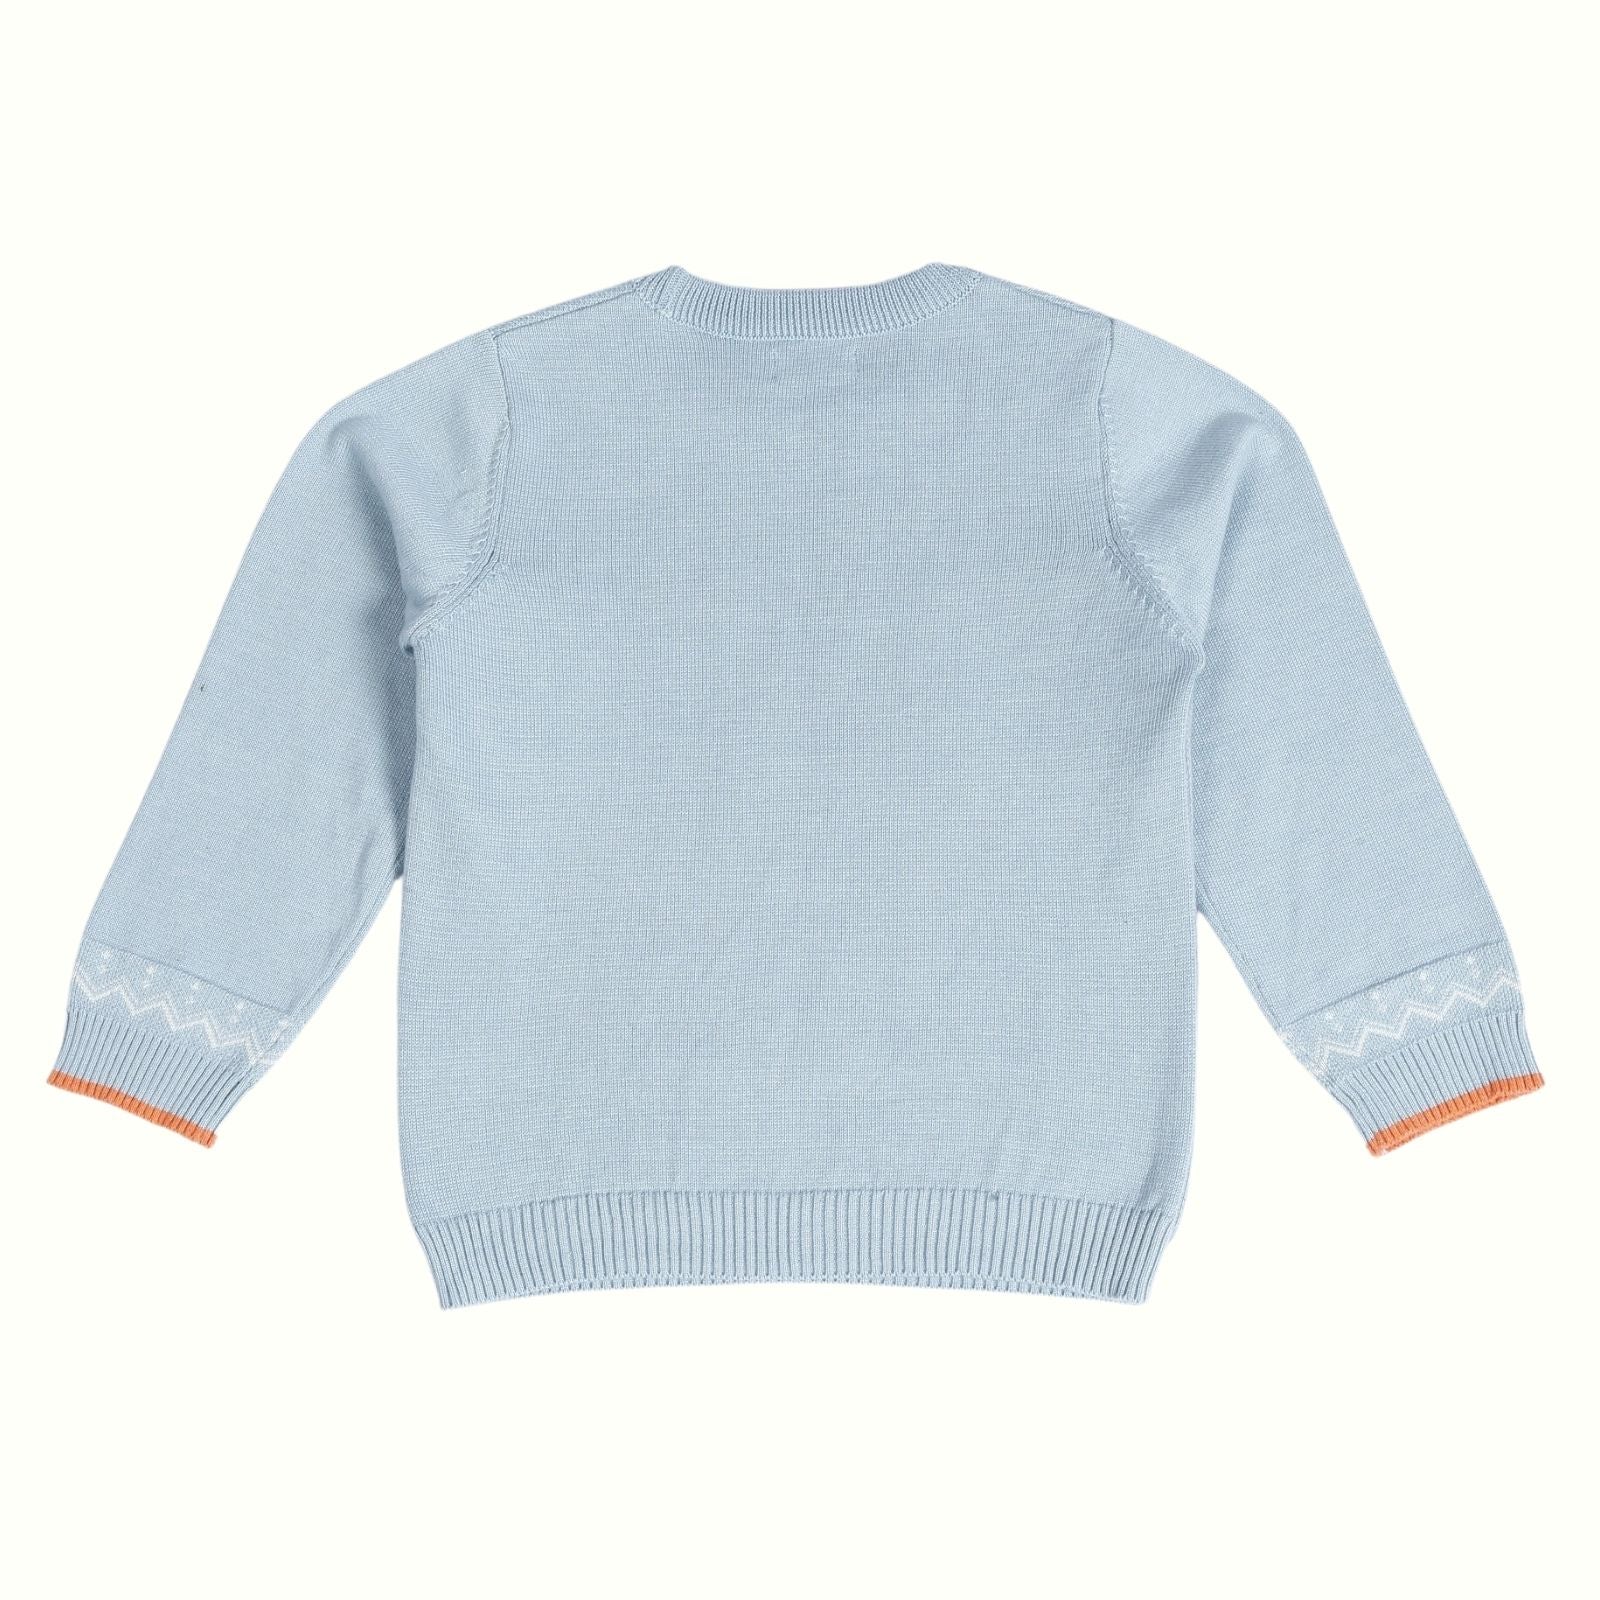 Greendeer Delighted Lion Jacquard 100% Cotton Sweater - Powder Blue & Orange